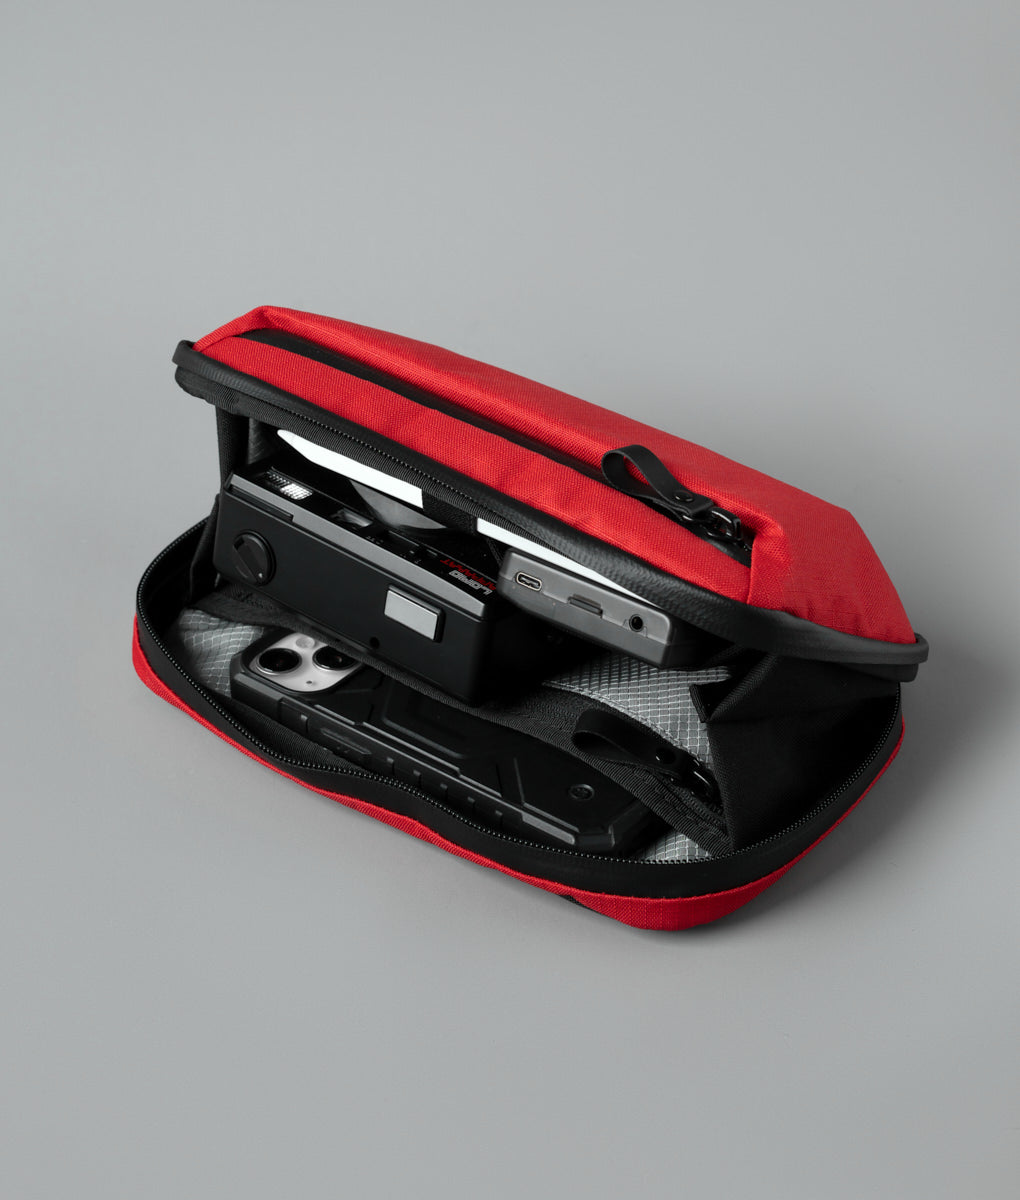 Elements Tech Case Mini - EPLX450 Revel Red